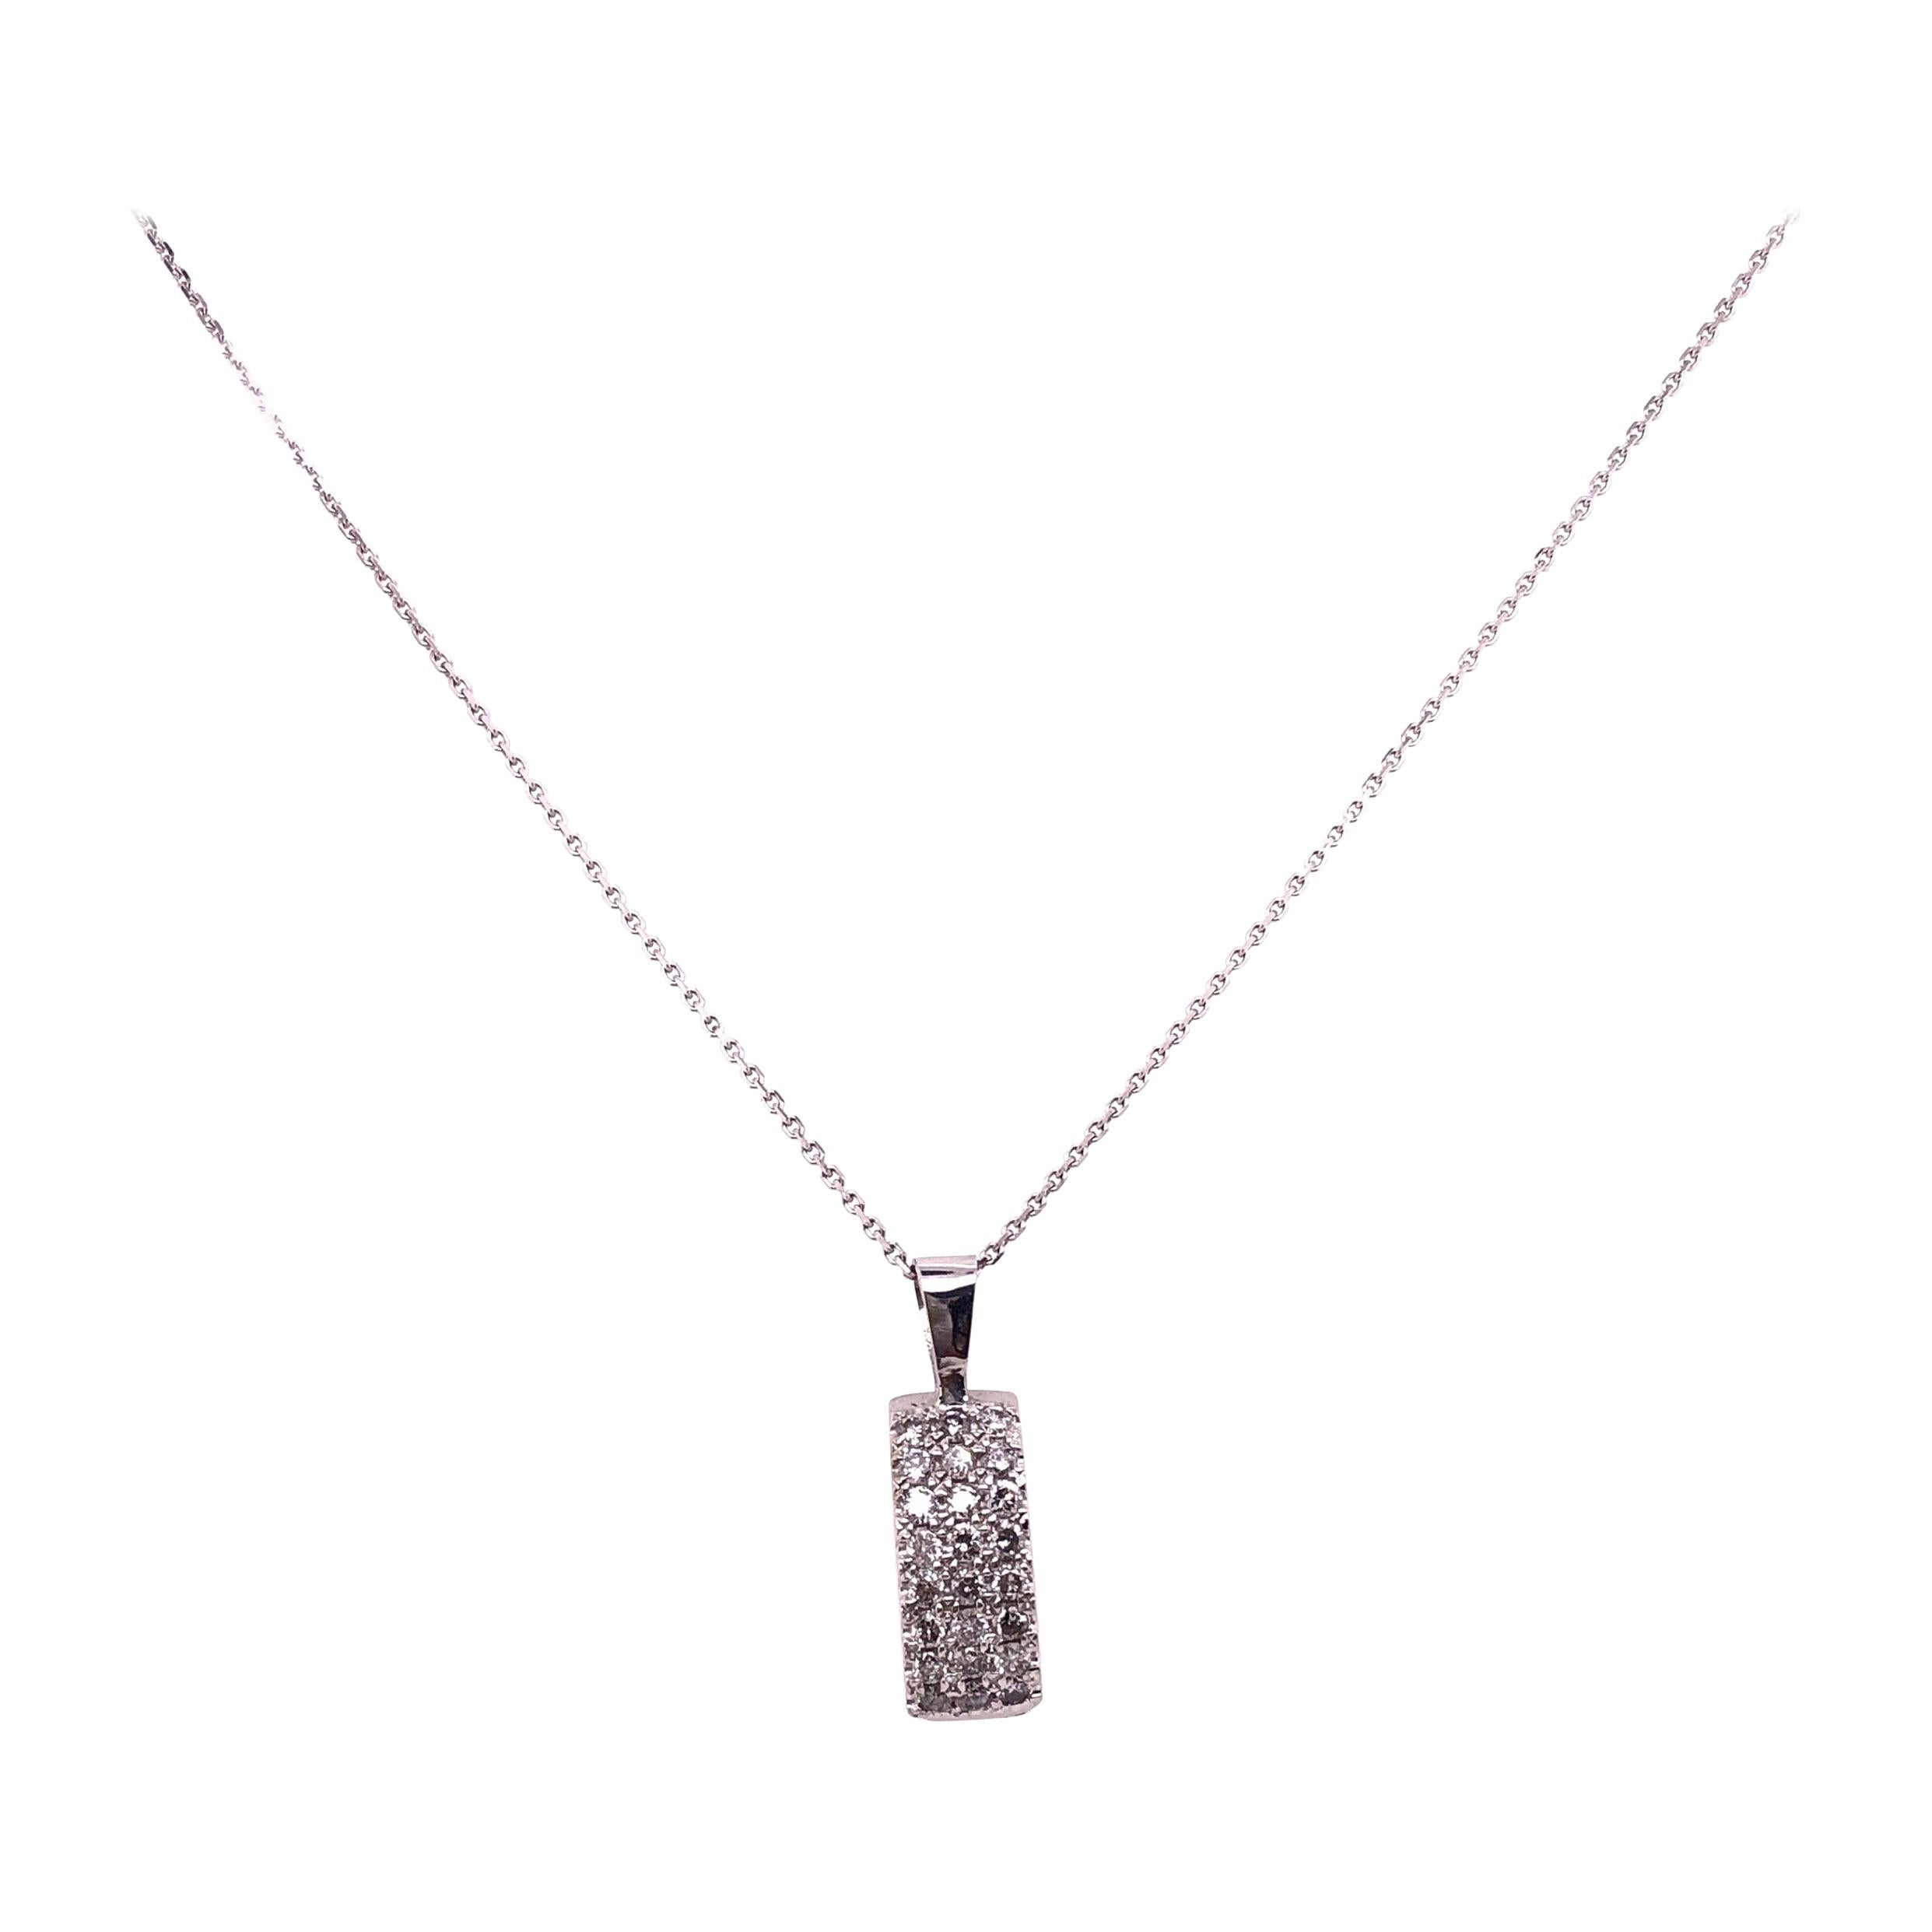 14 Karat White Gold Necklace with Pendant .80 Carat Diamond